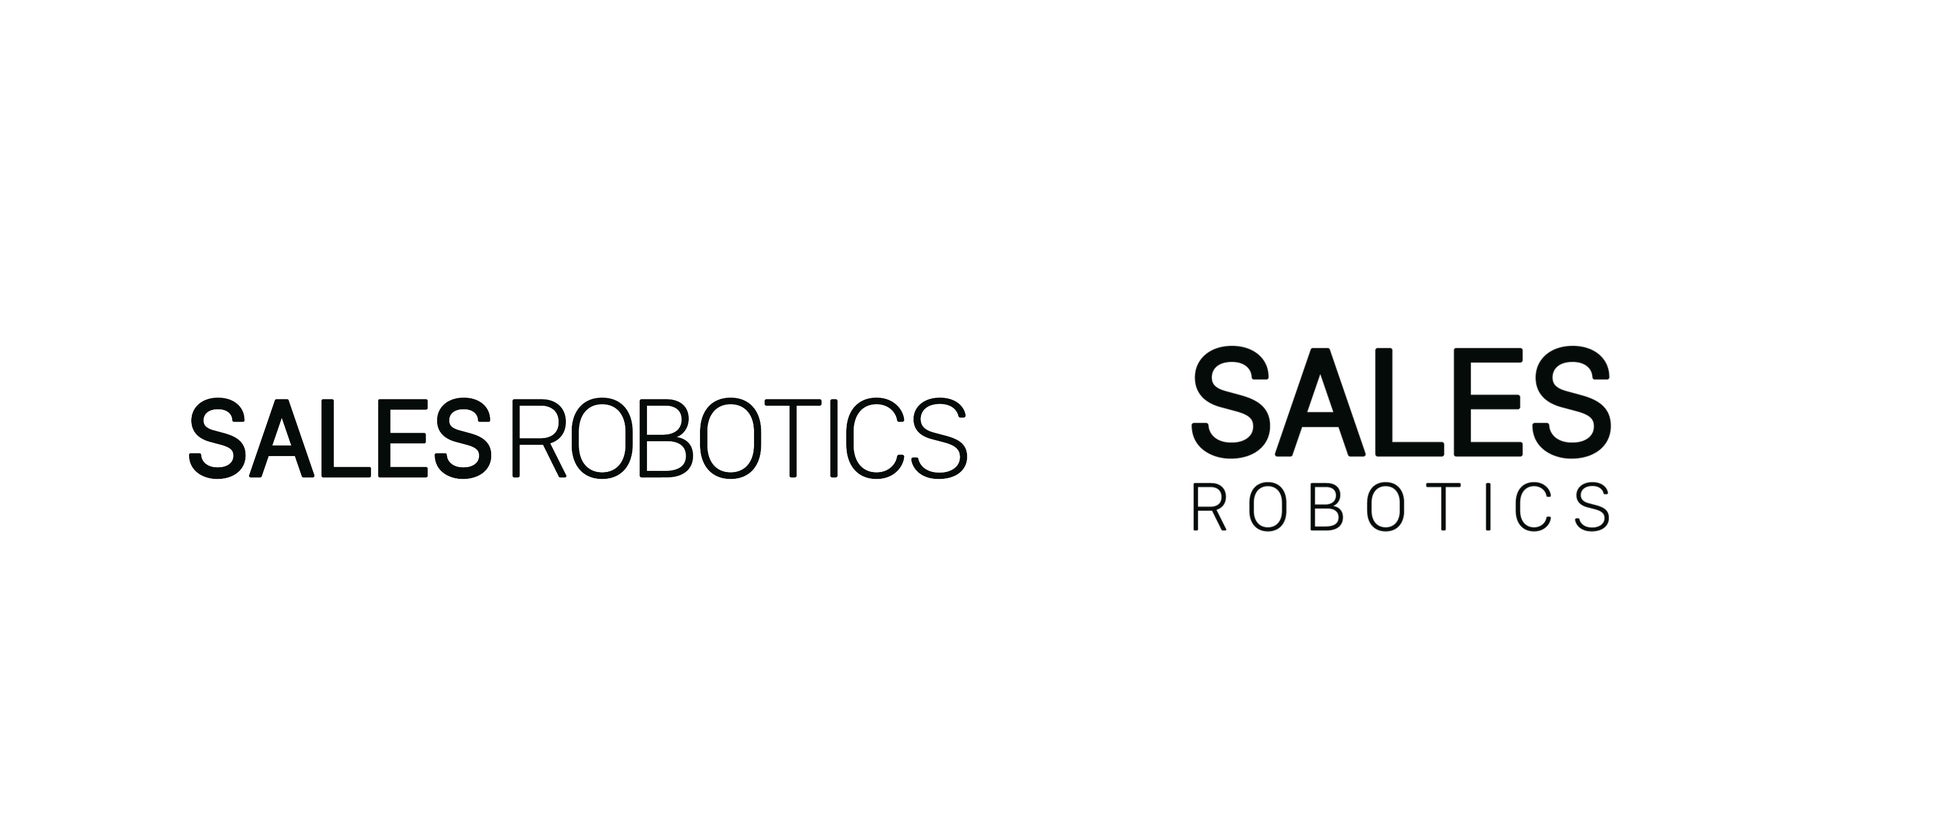 SALES ROBOTICS株式会社、コーポレートブランドを完全リニューアルのサブ画像2